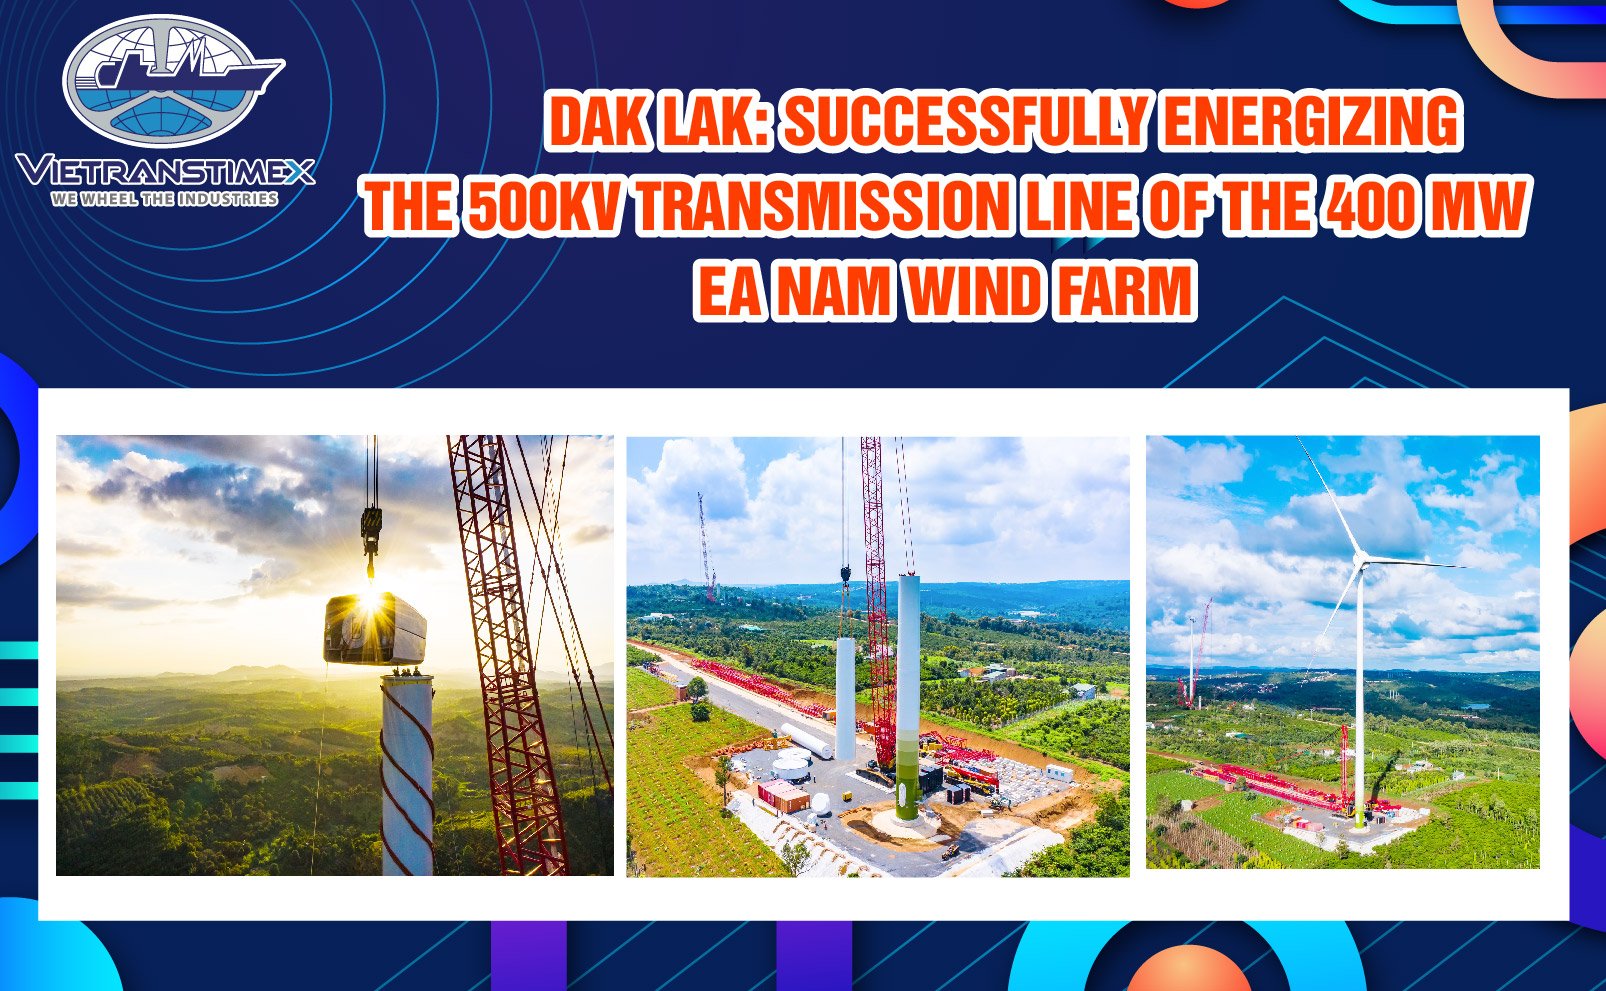 Dak Lak: Successfully energizing the 500kV transmission line of The 400 MW Ea Nam wind farm